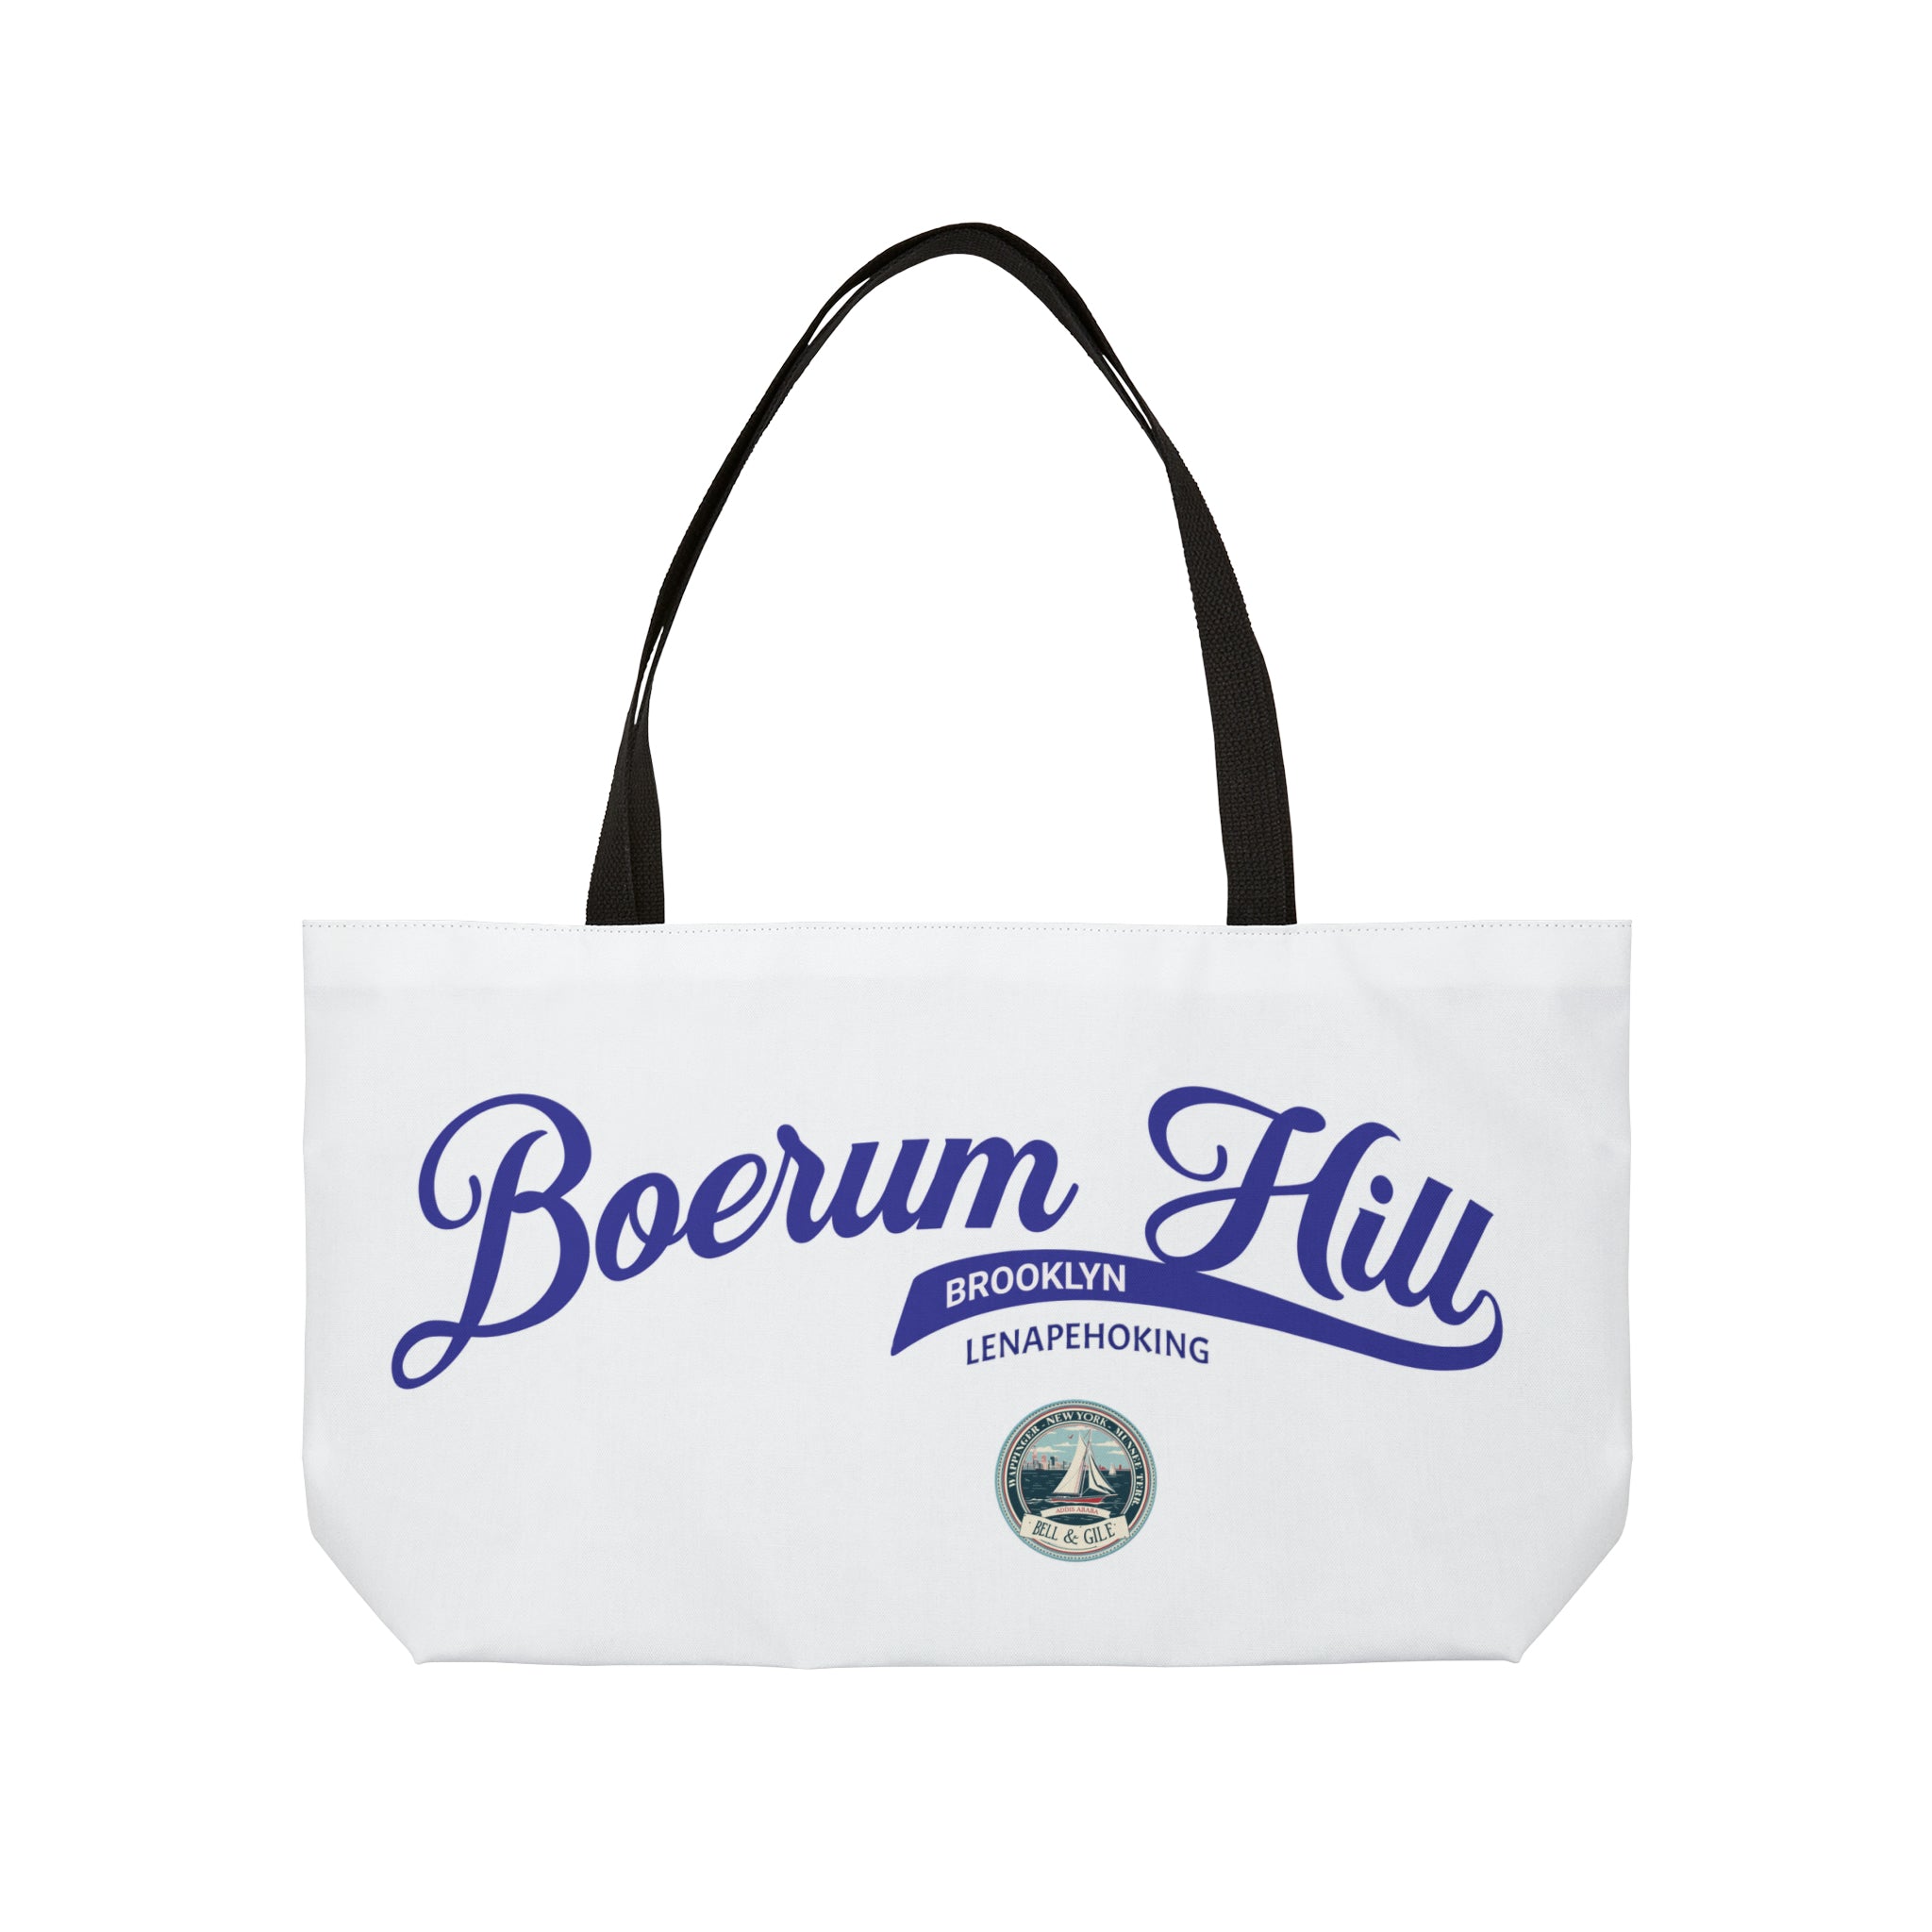 Boerum Hill Tote Bag